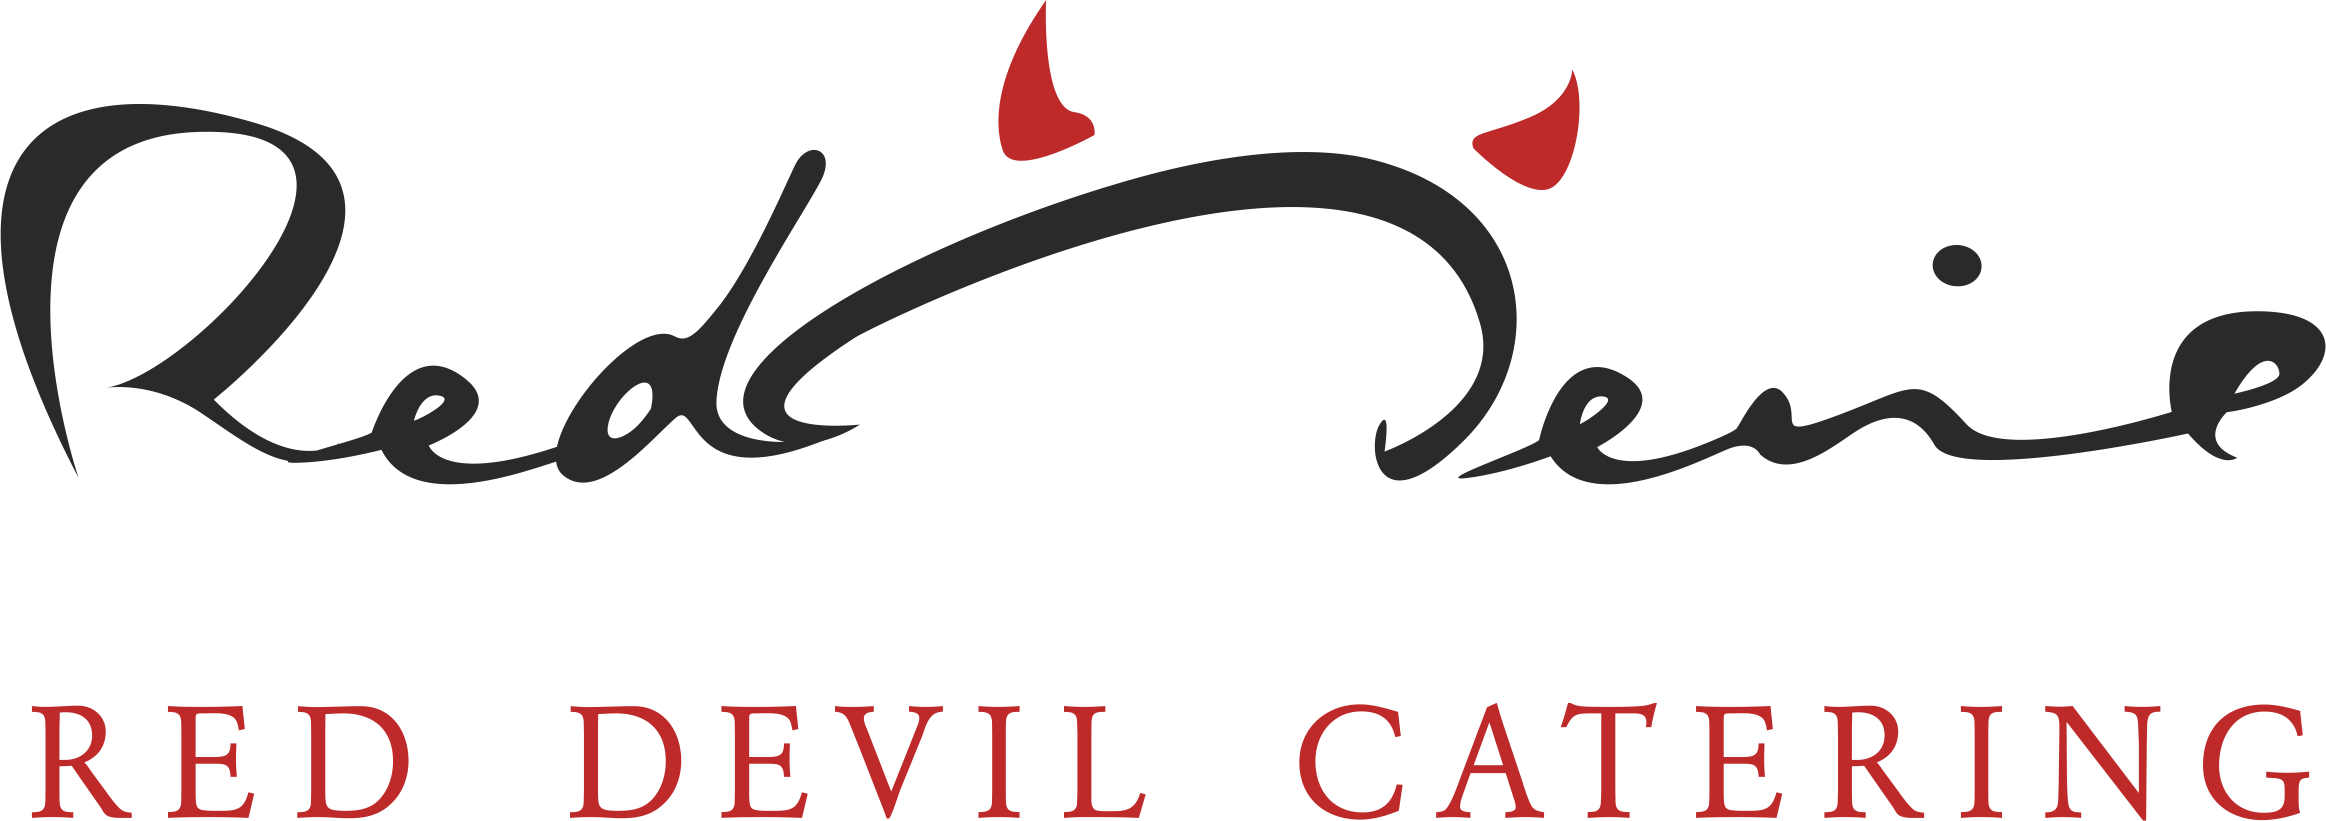 Red Devil Logo - Red Devil logo | Global Eventex Awards